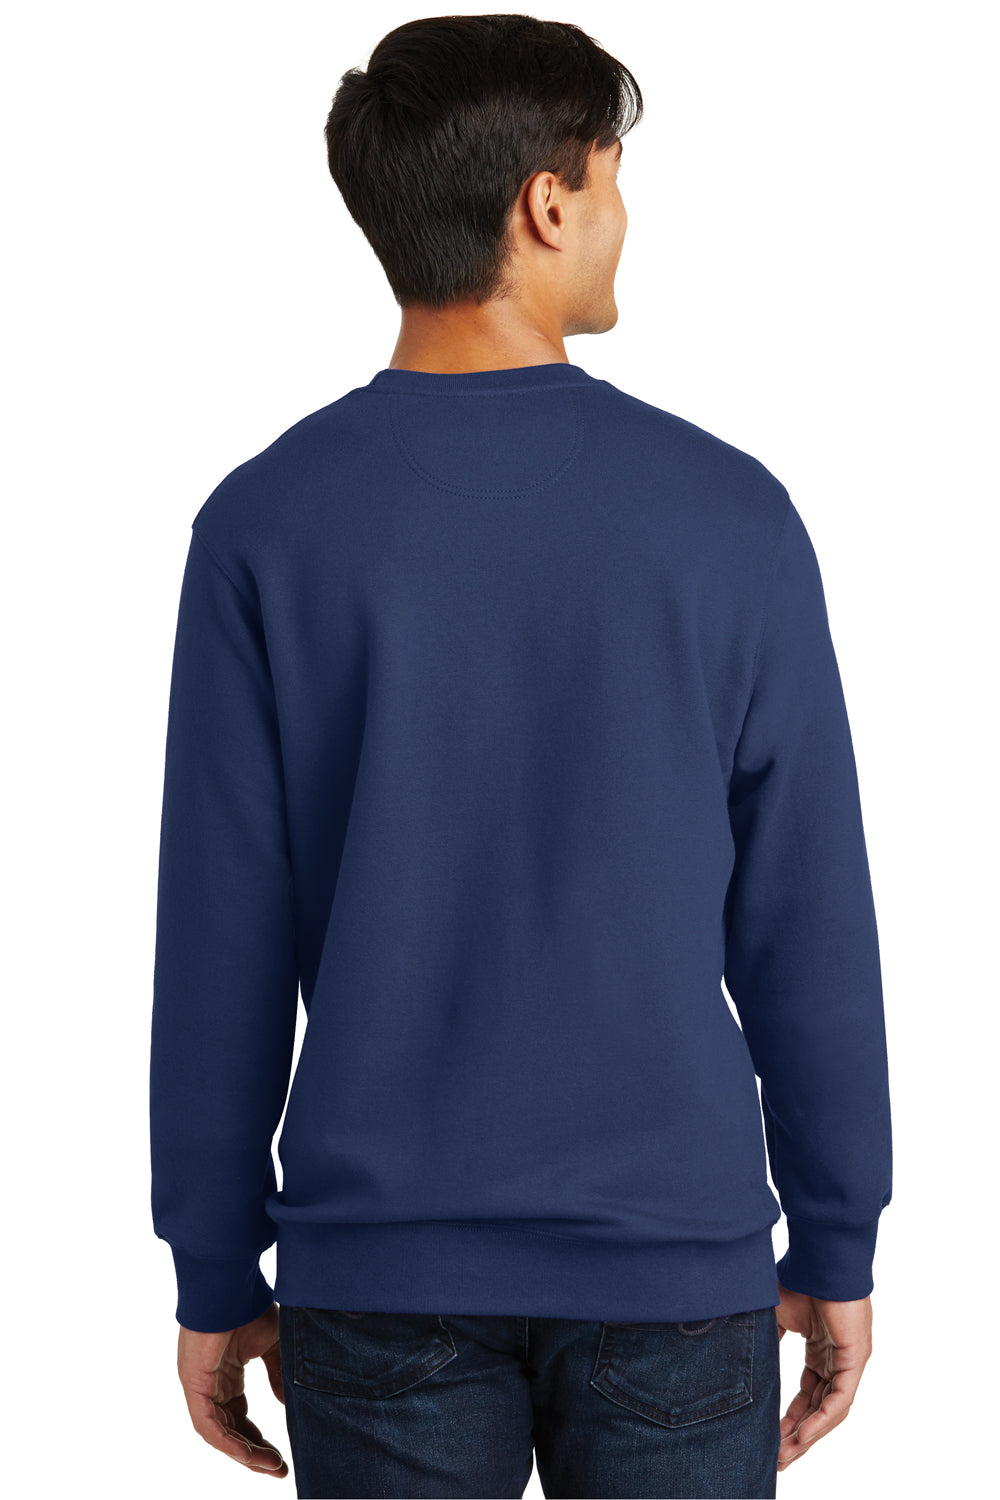 Port & Company PC850 Mens Fan Favorite Fleece Crewneck Sweatshirt Navy Blue Back